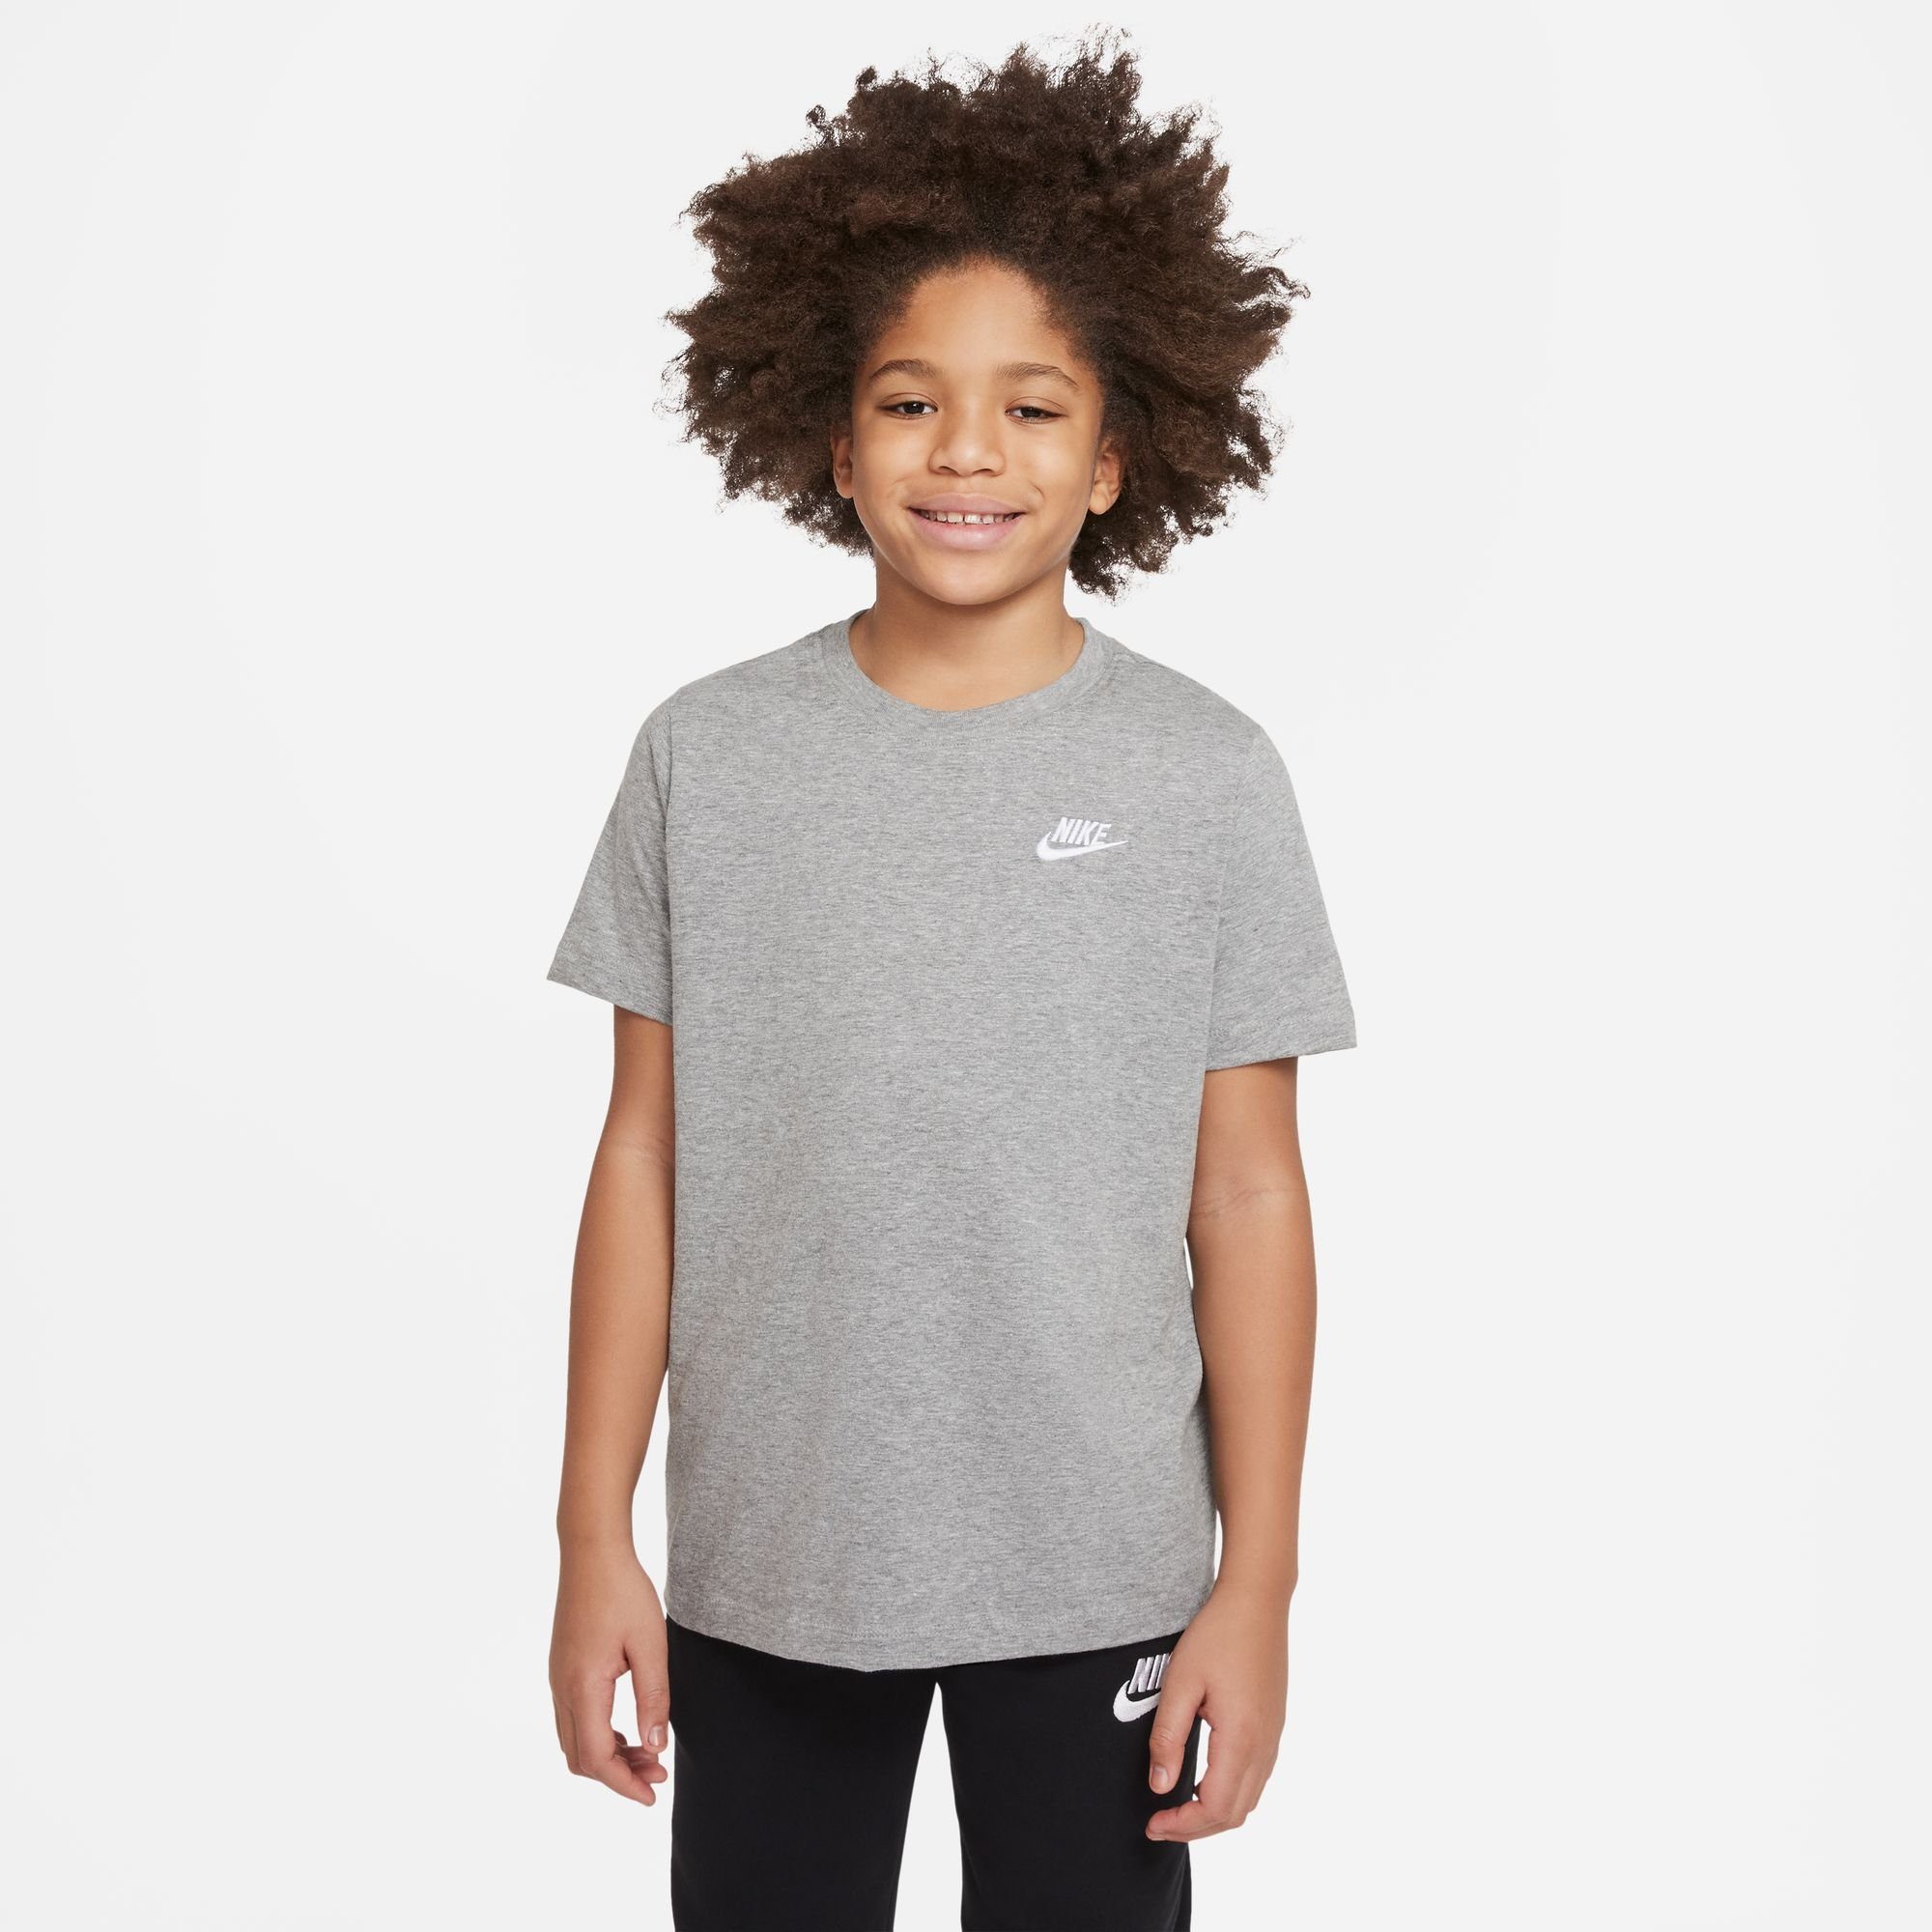 Nike T-shirt grijs